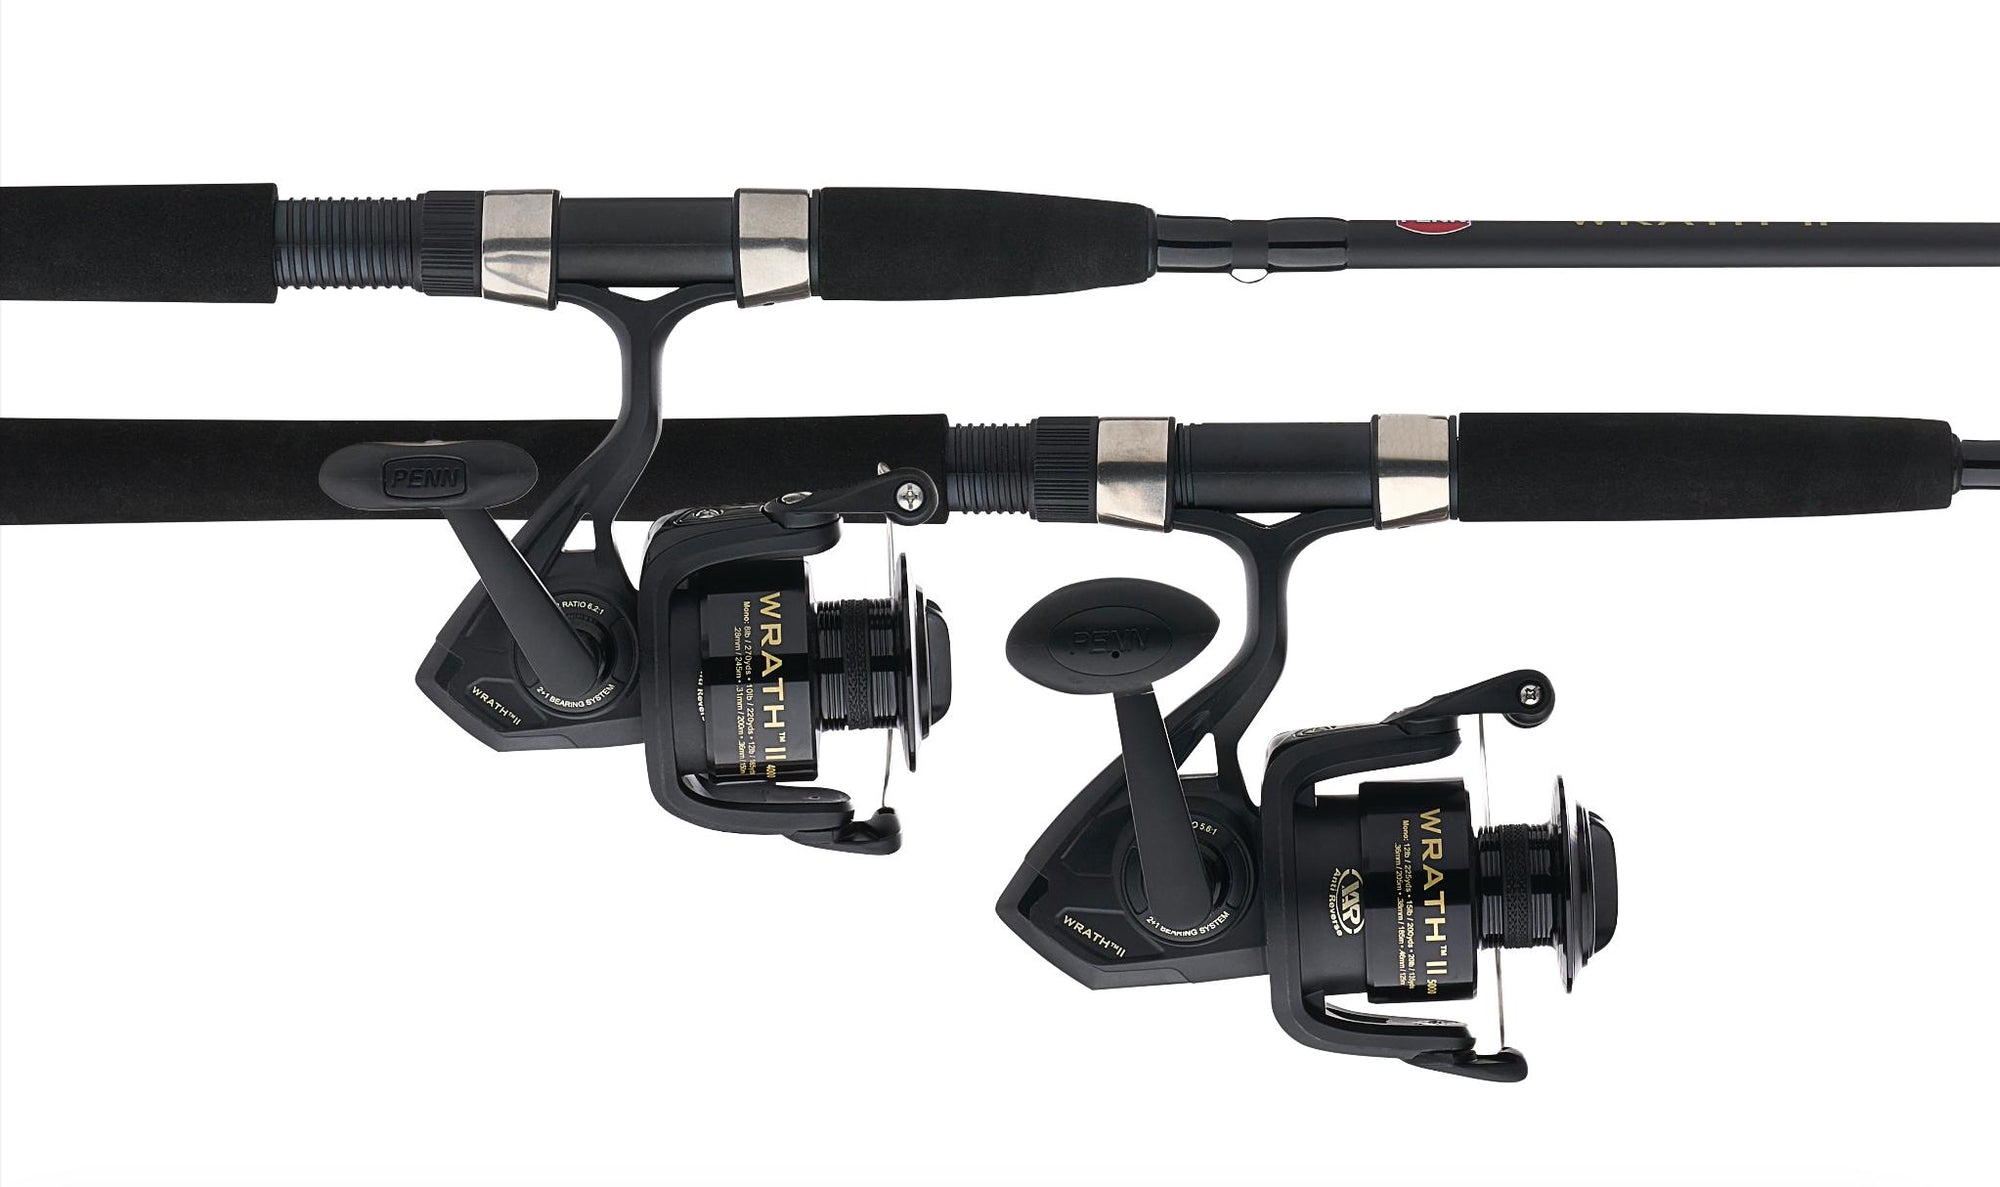 Zebco Advanced Telescopic Spinning Fishing Rods, Anti-Reverse, Medium, 6-ft,  2-pc